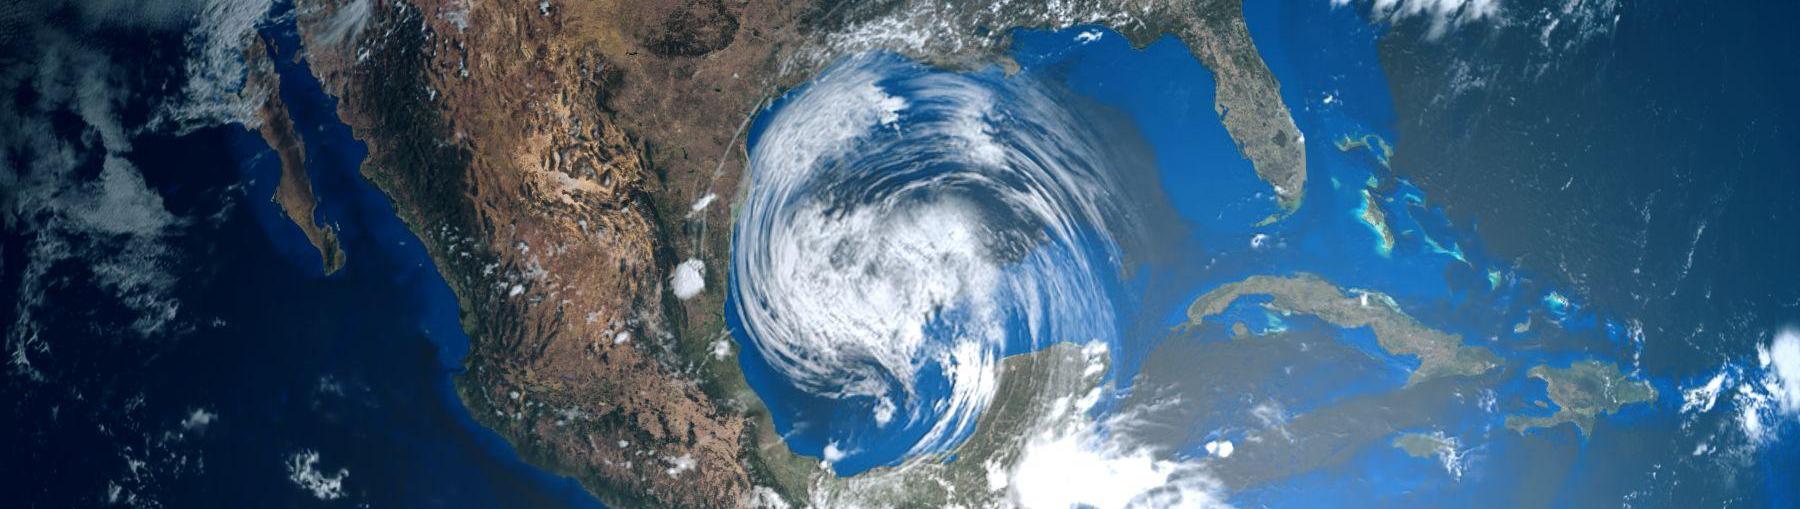 Zdjęcie satelitarne huraganu Harvey Fot.  Sasa Kadrijevic/Shutterstock